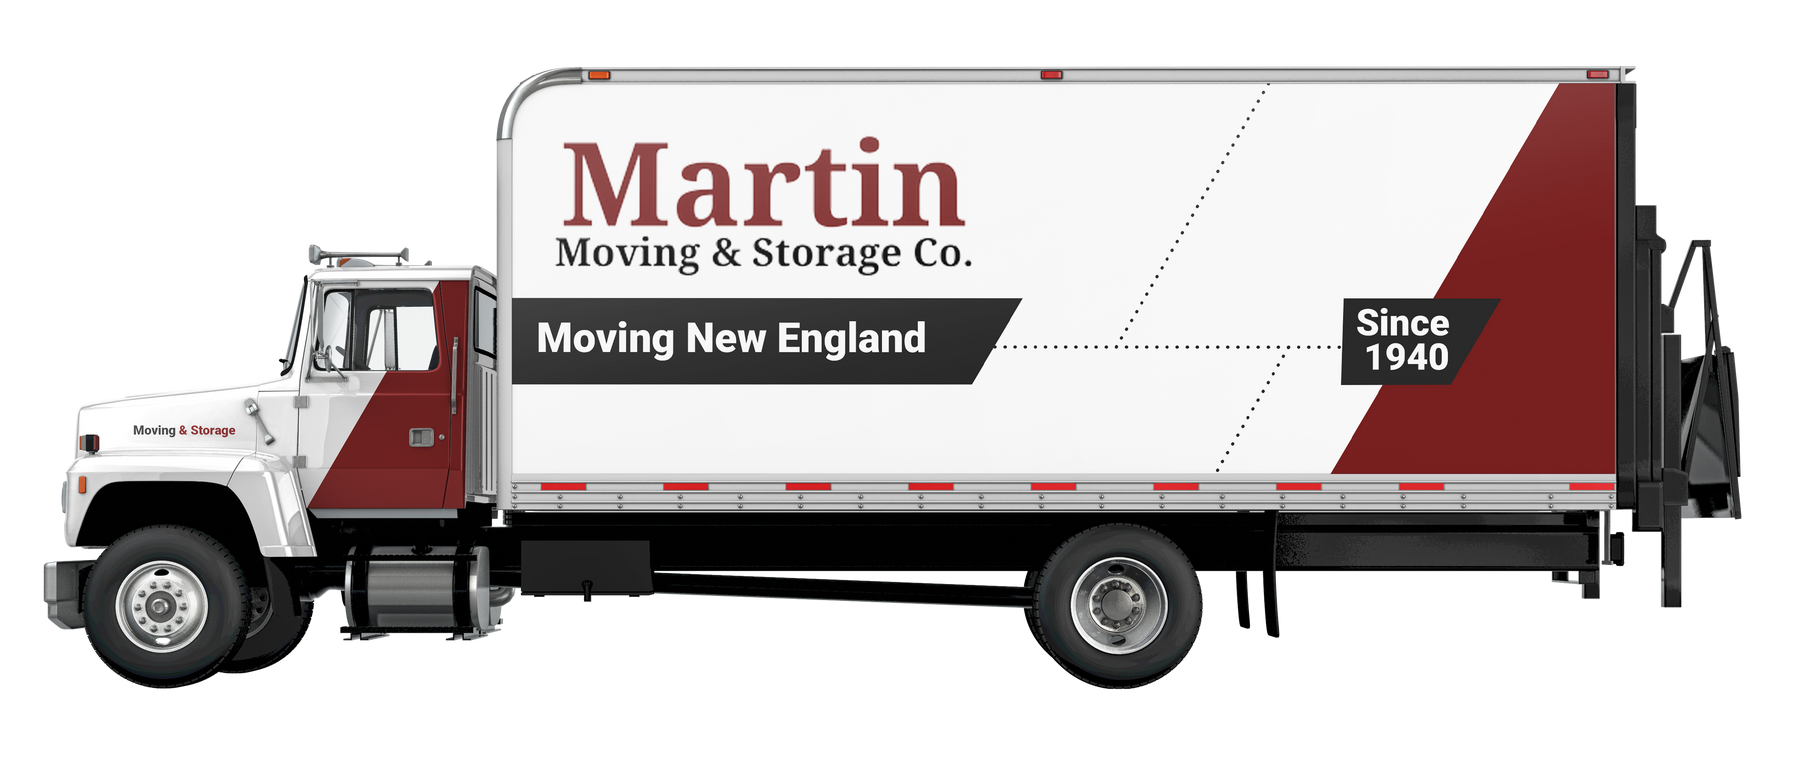 Martin Moving & Storage Truck